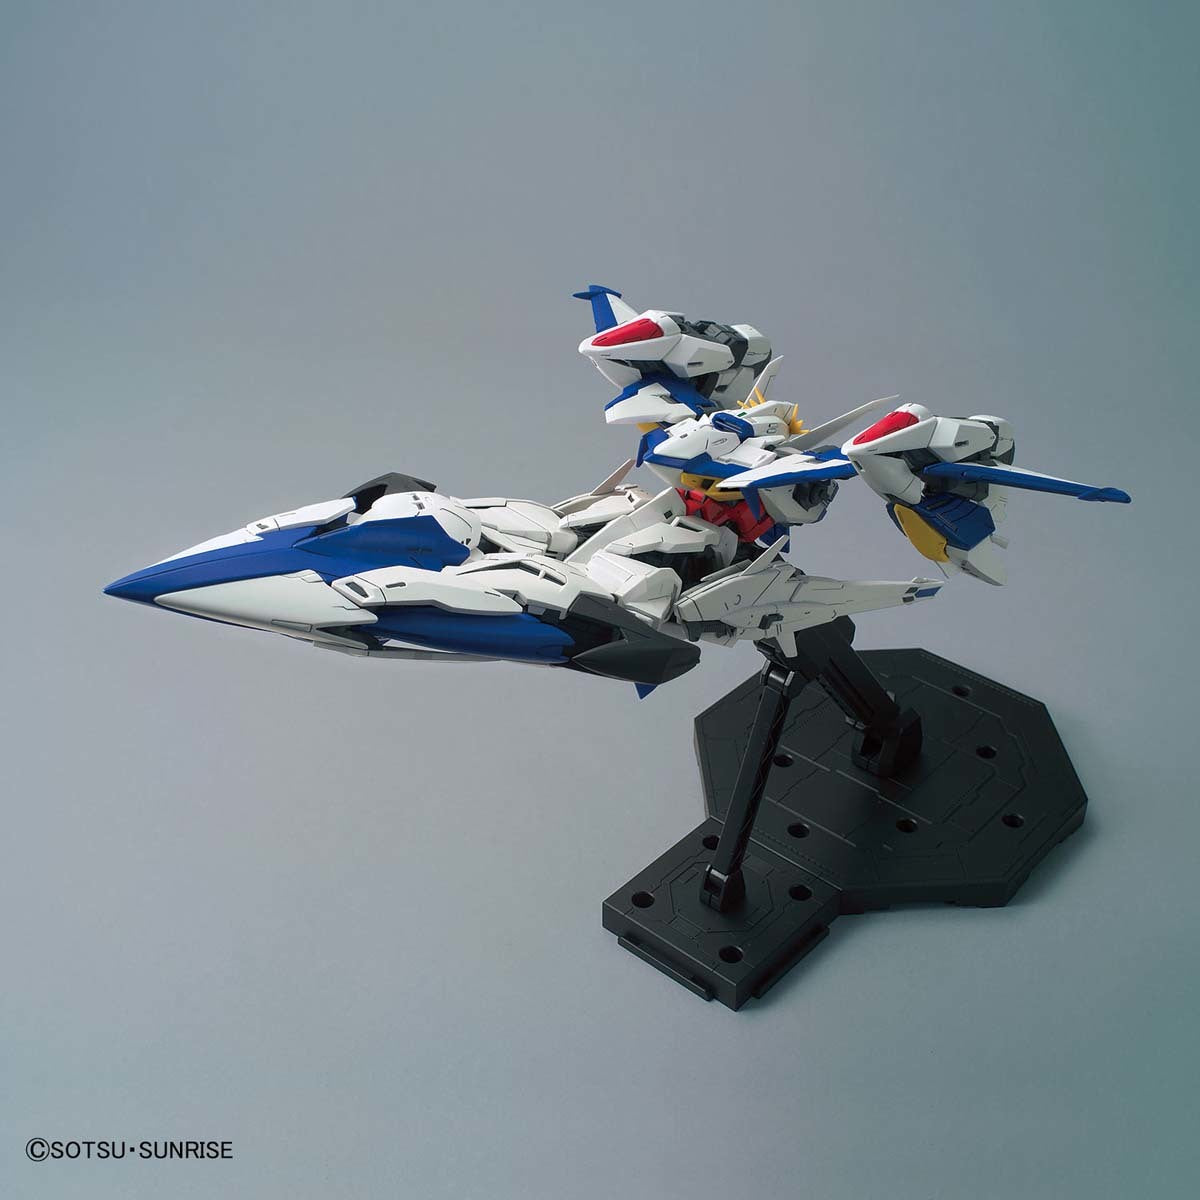 MG #217 MVF-X08 Eclipse Gundam